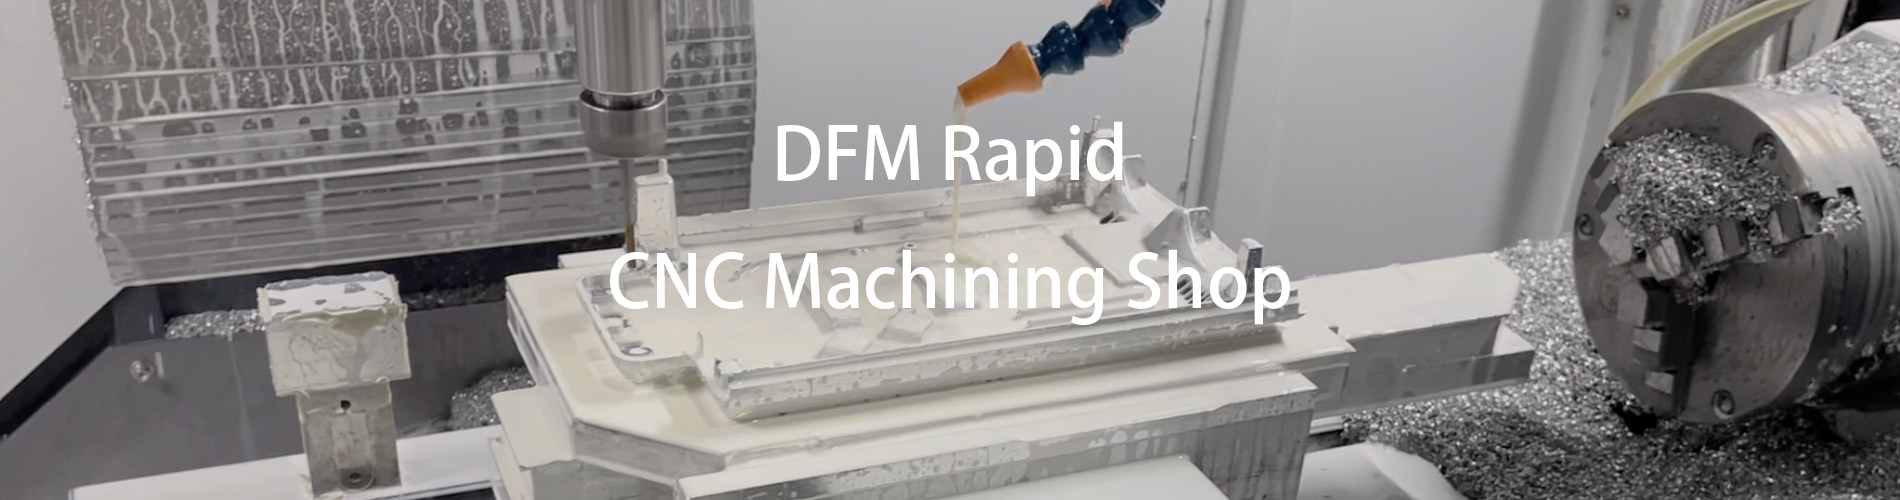 CNC Machined Rapid Prototyping